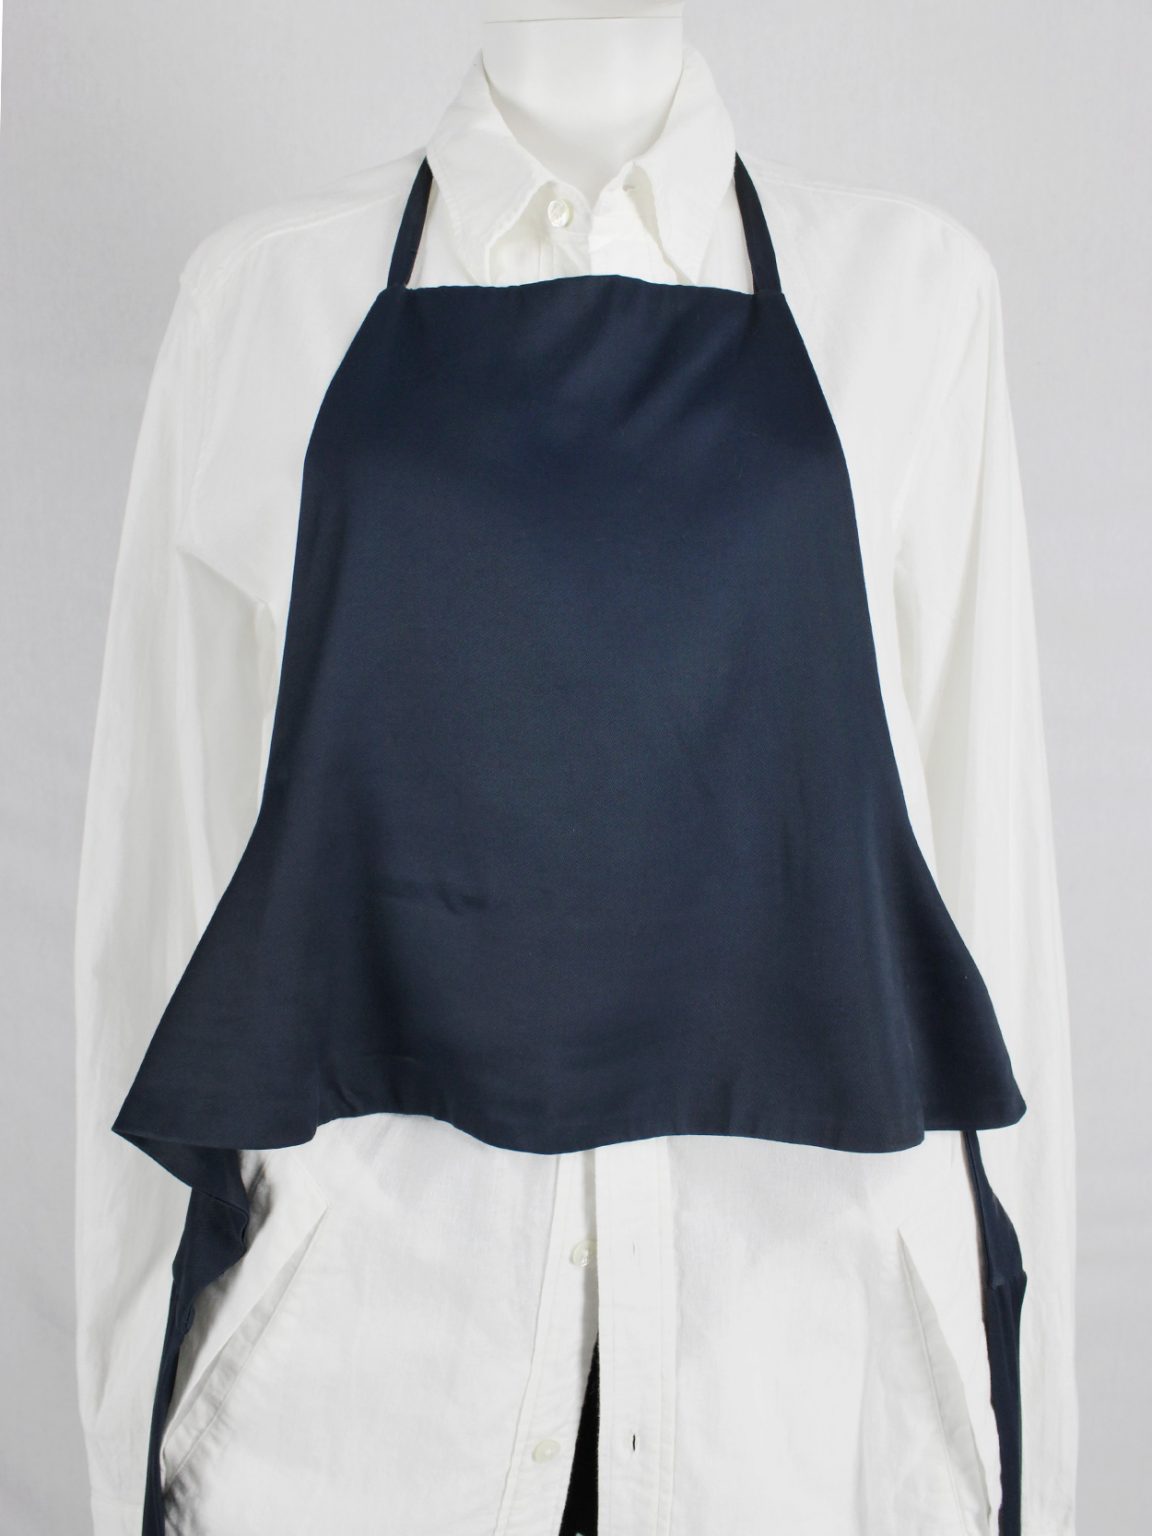 Lieve van gorp dark blue cropped apron with bowtie back — 1990's